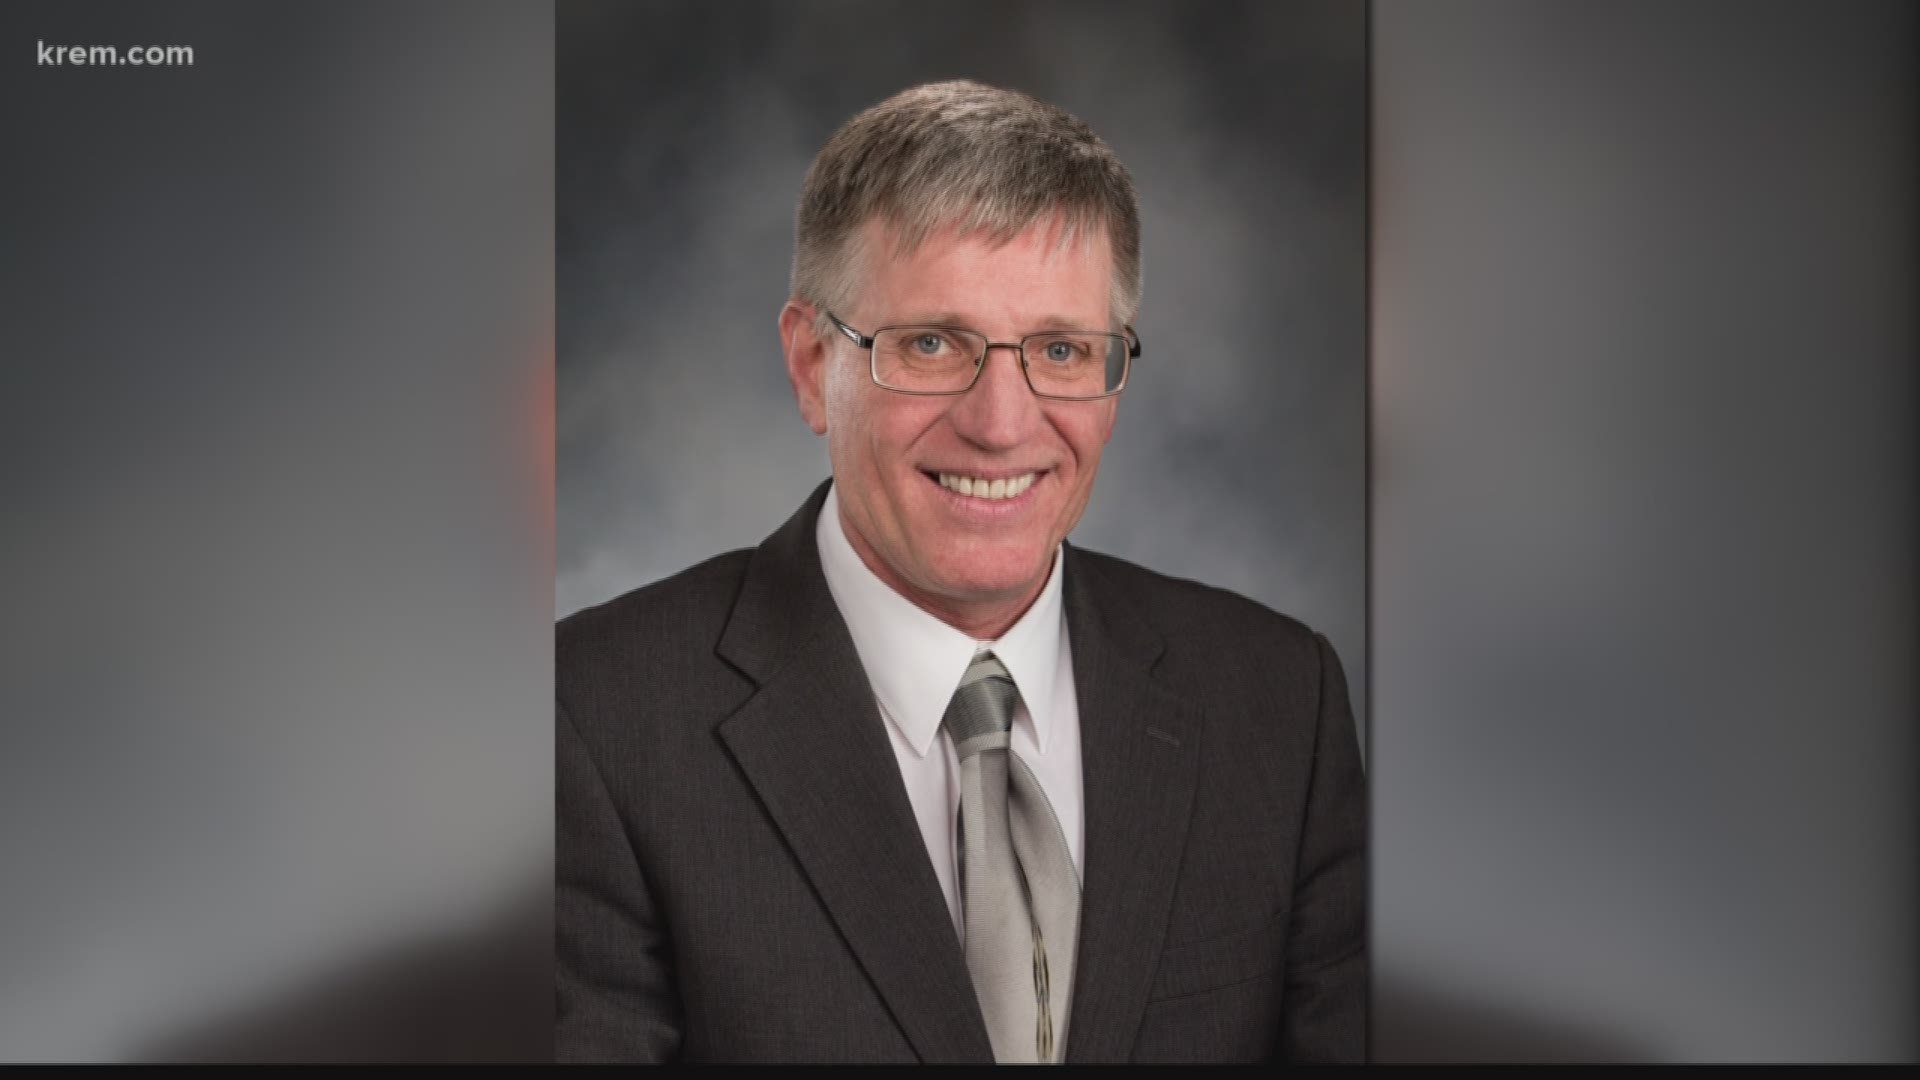 Spokane lawmaker pleads guilty to reckless driving in DUI case